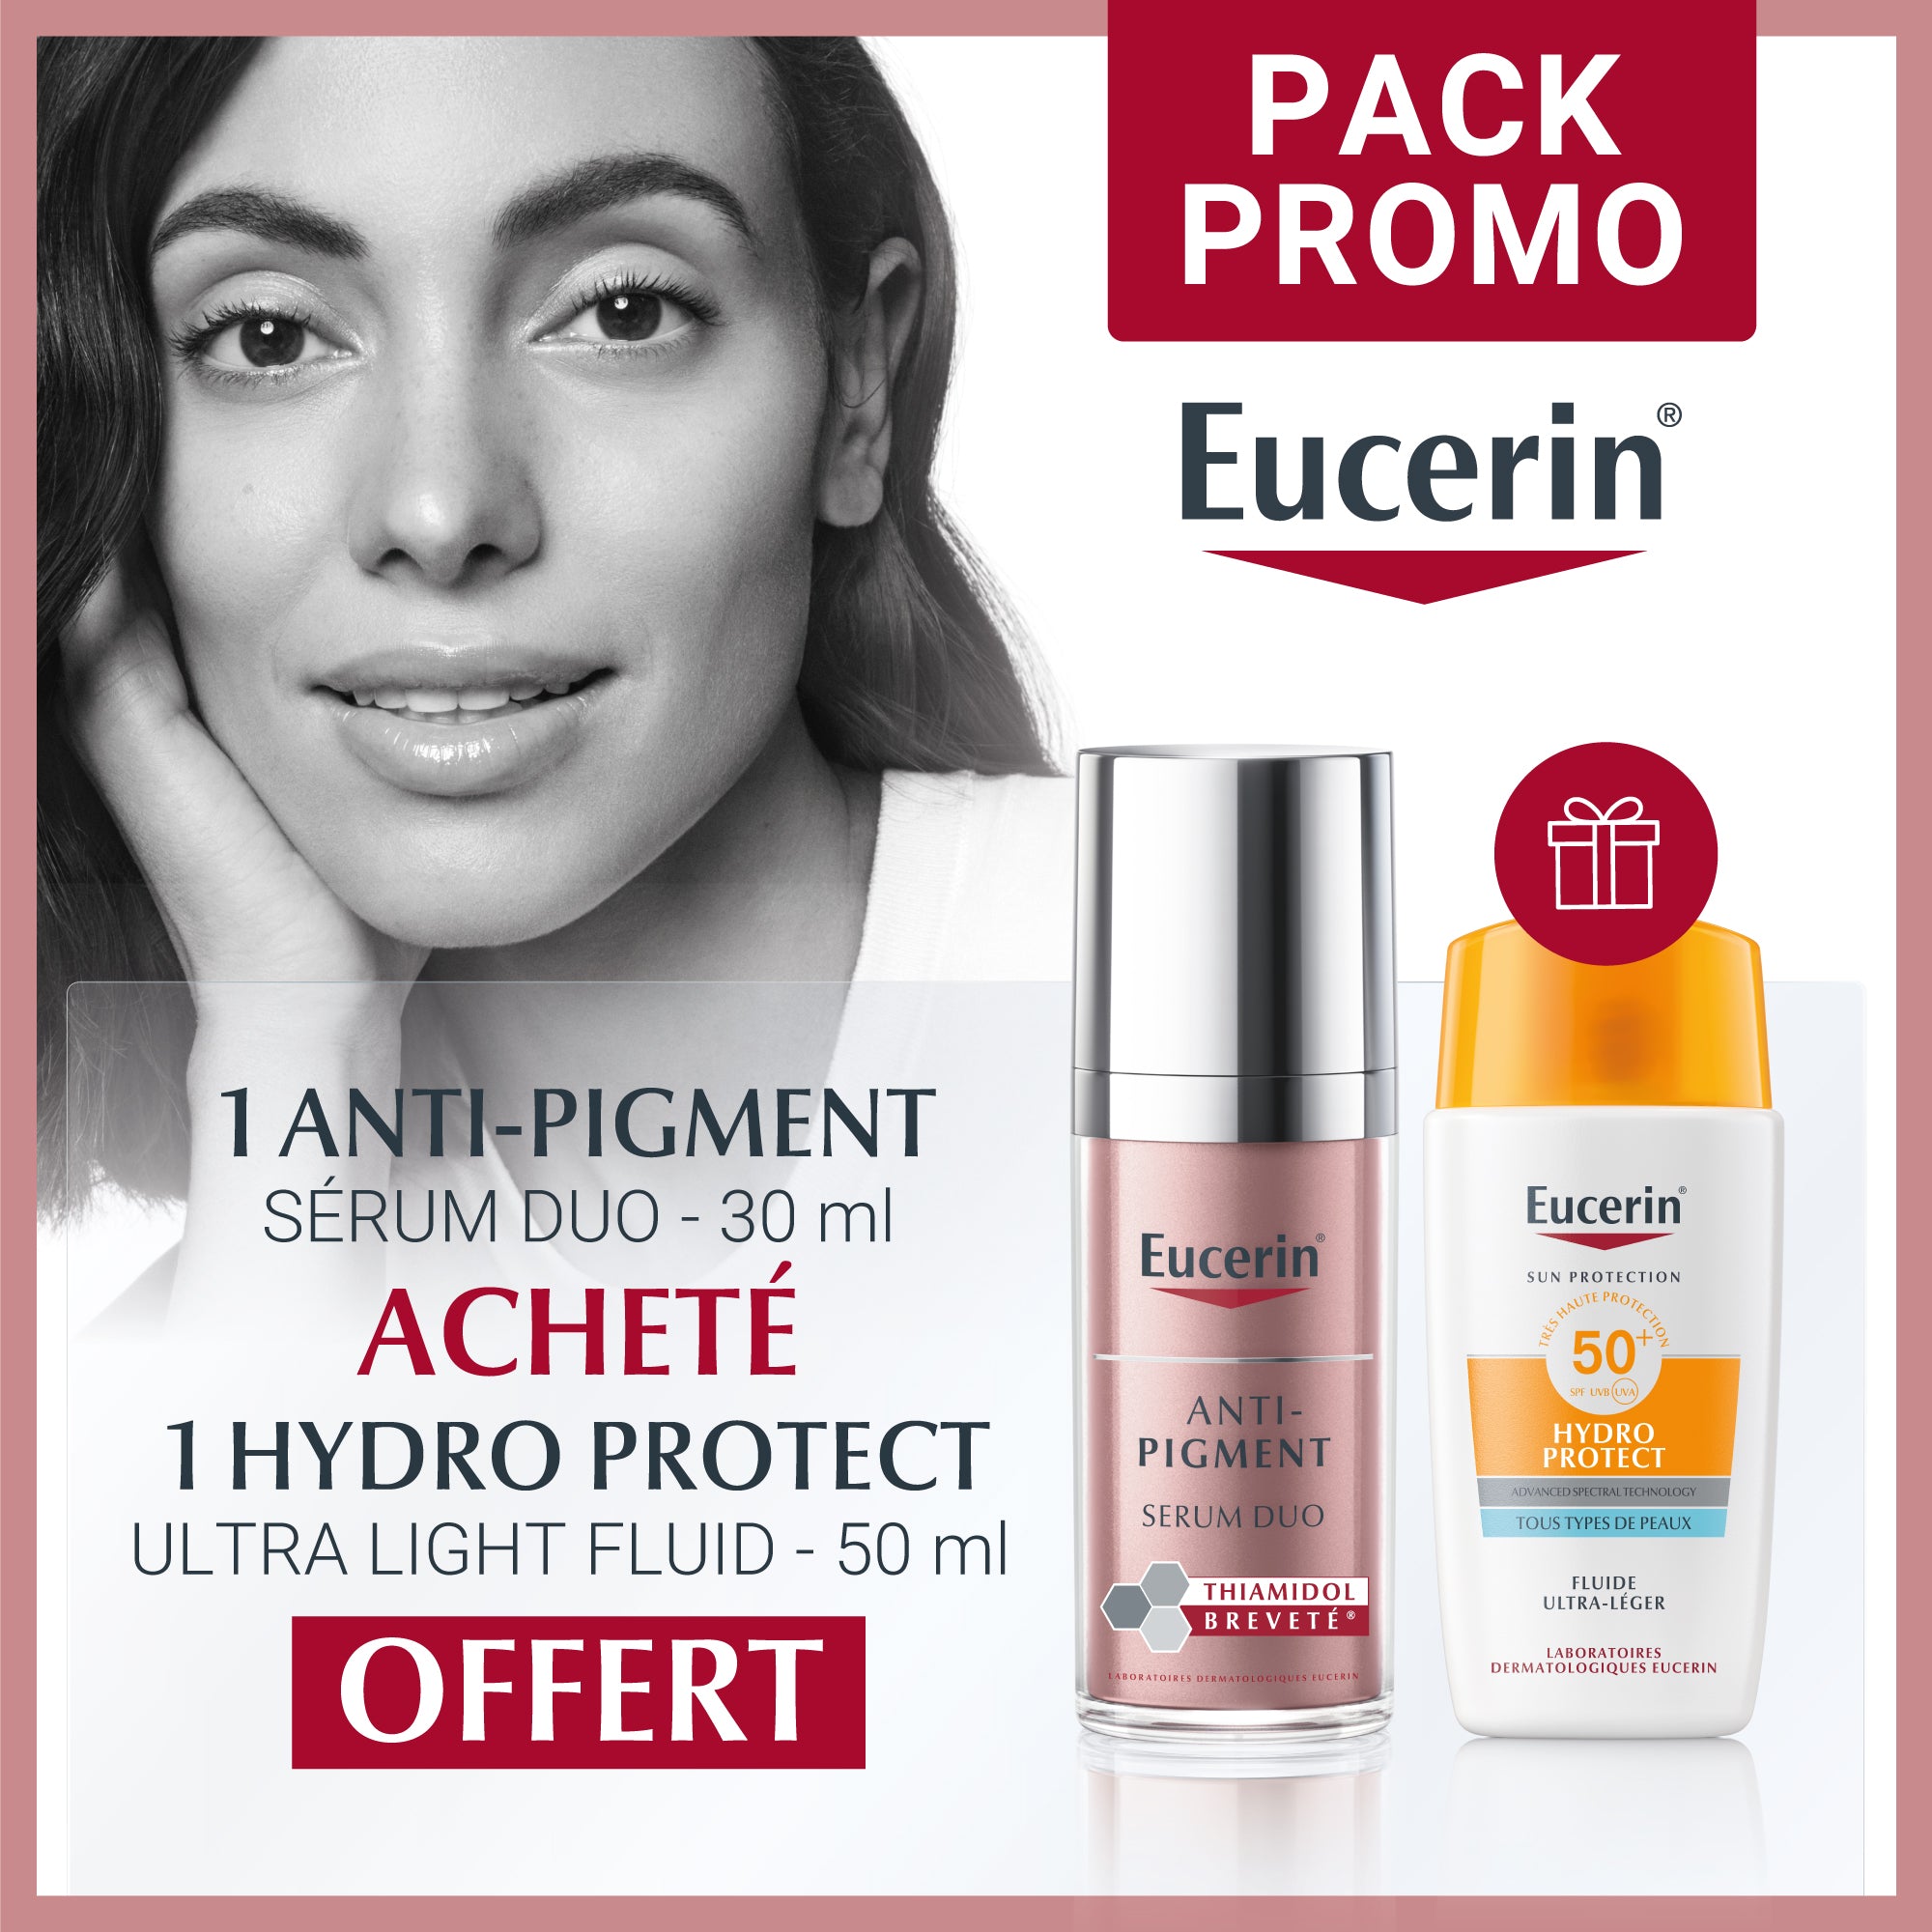 Eucerin – Anti-Pigment Sérum Duo – 30 ml = Hydro Protect Ultra Light Fluid 50ml OFFERT